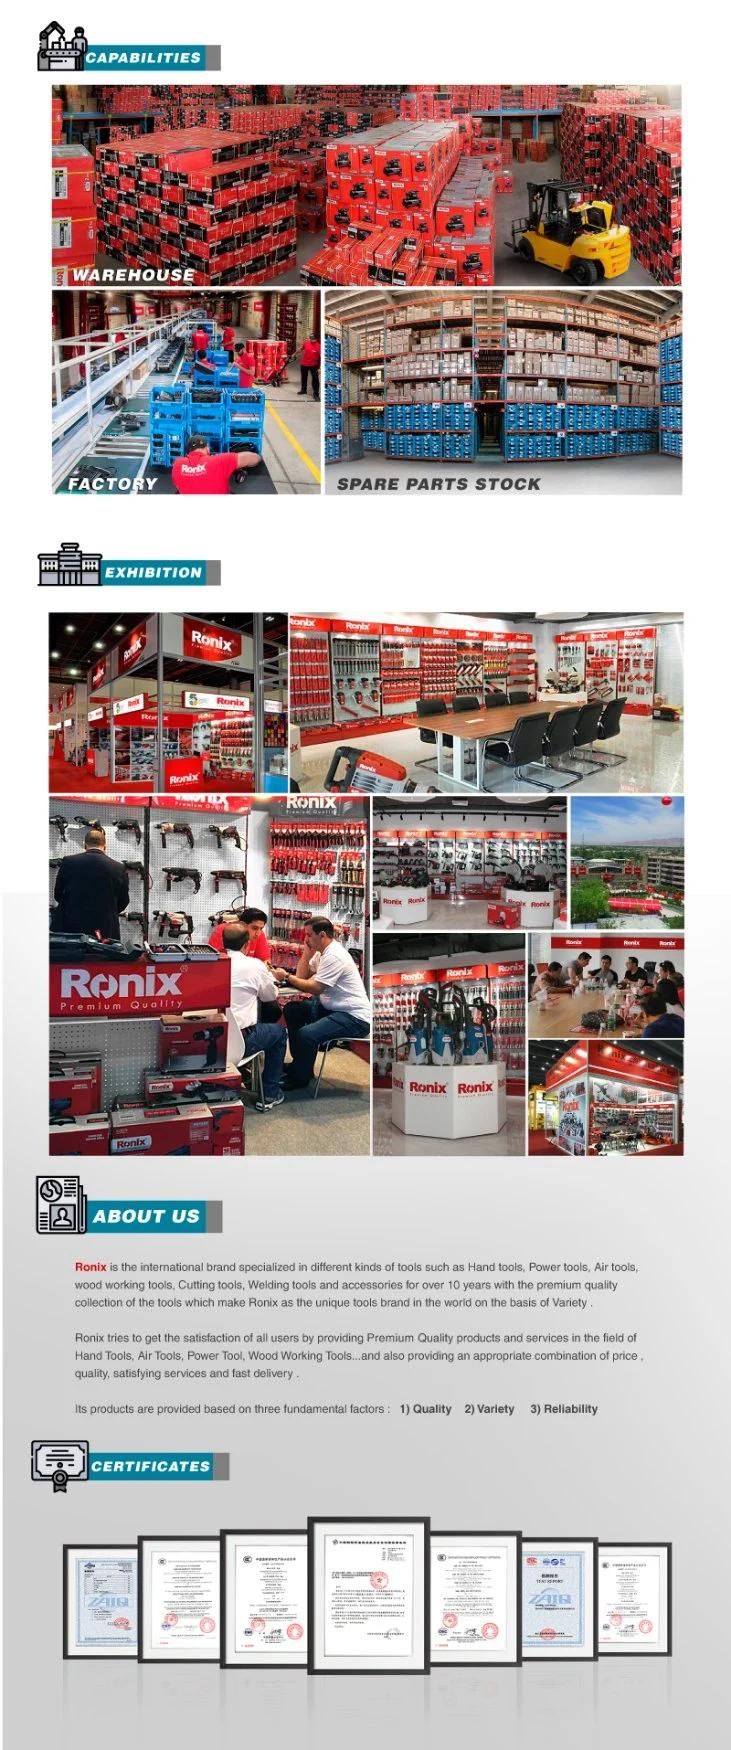 Ronix Premium Power Tool Model 5404 220V 305mm Wood Working Electric Sliding Miter Saw